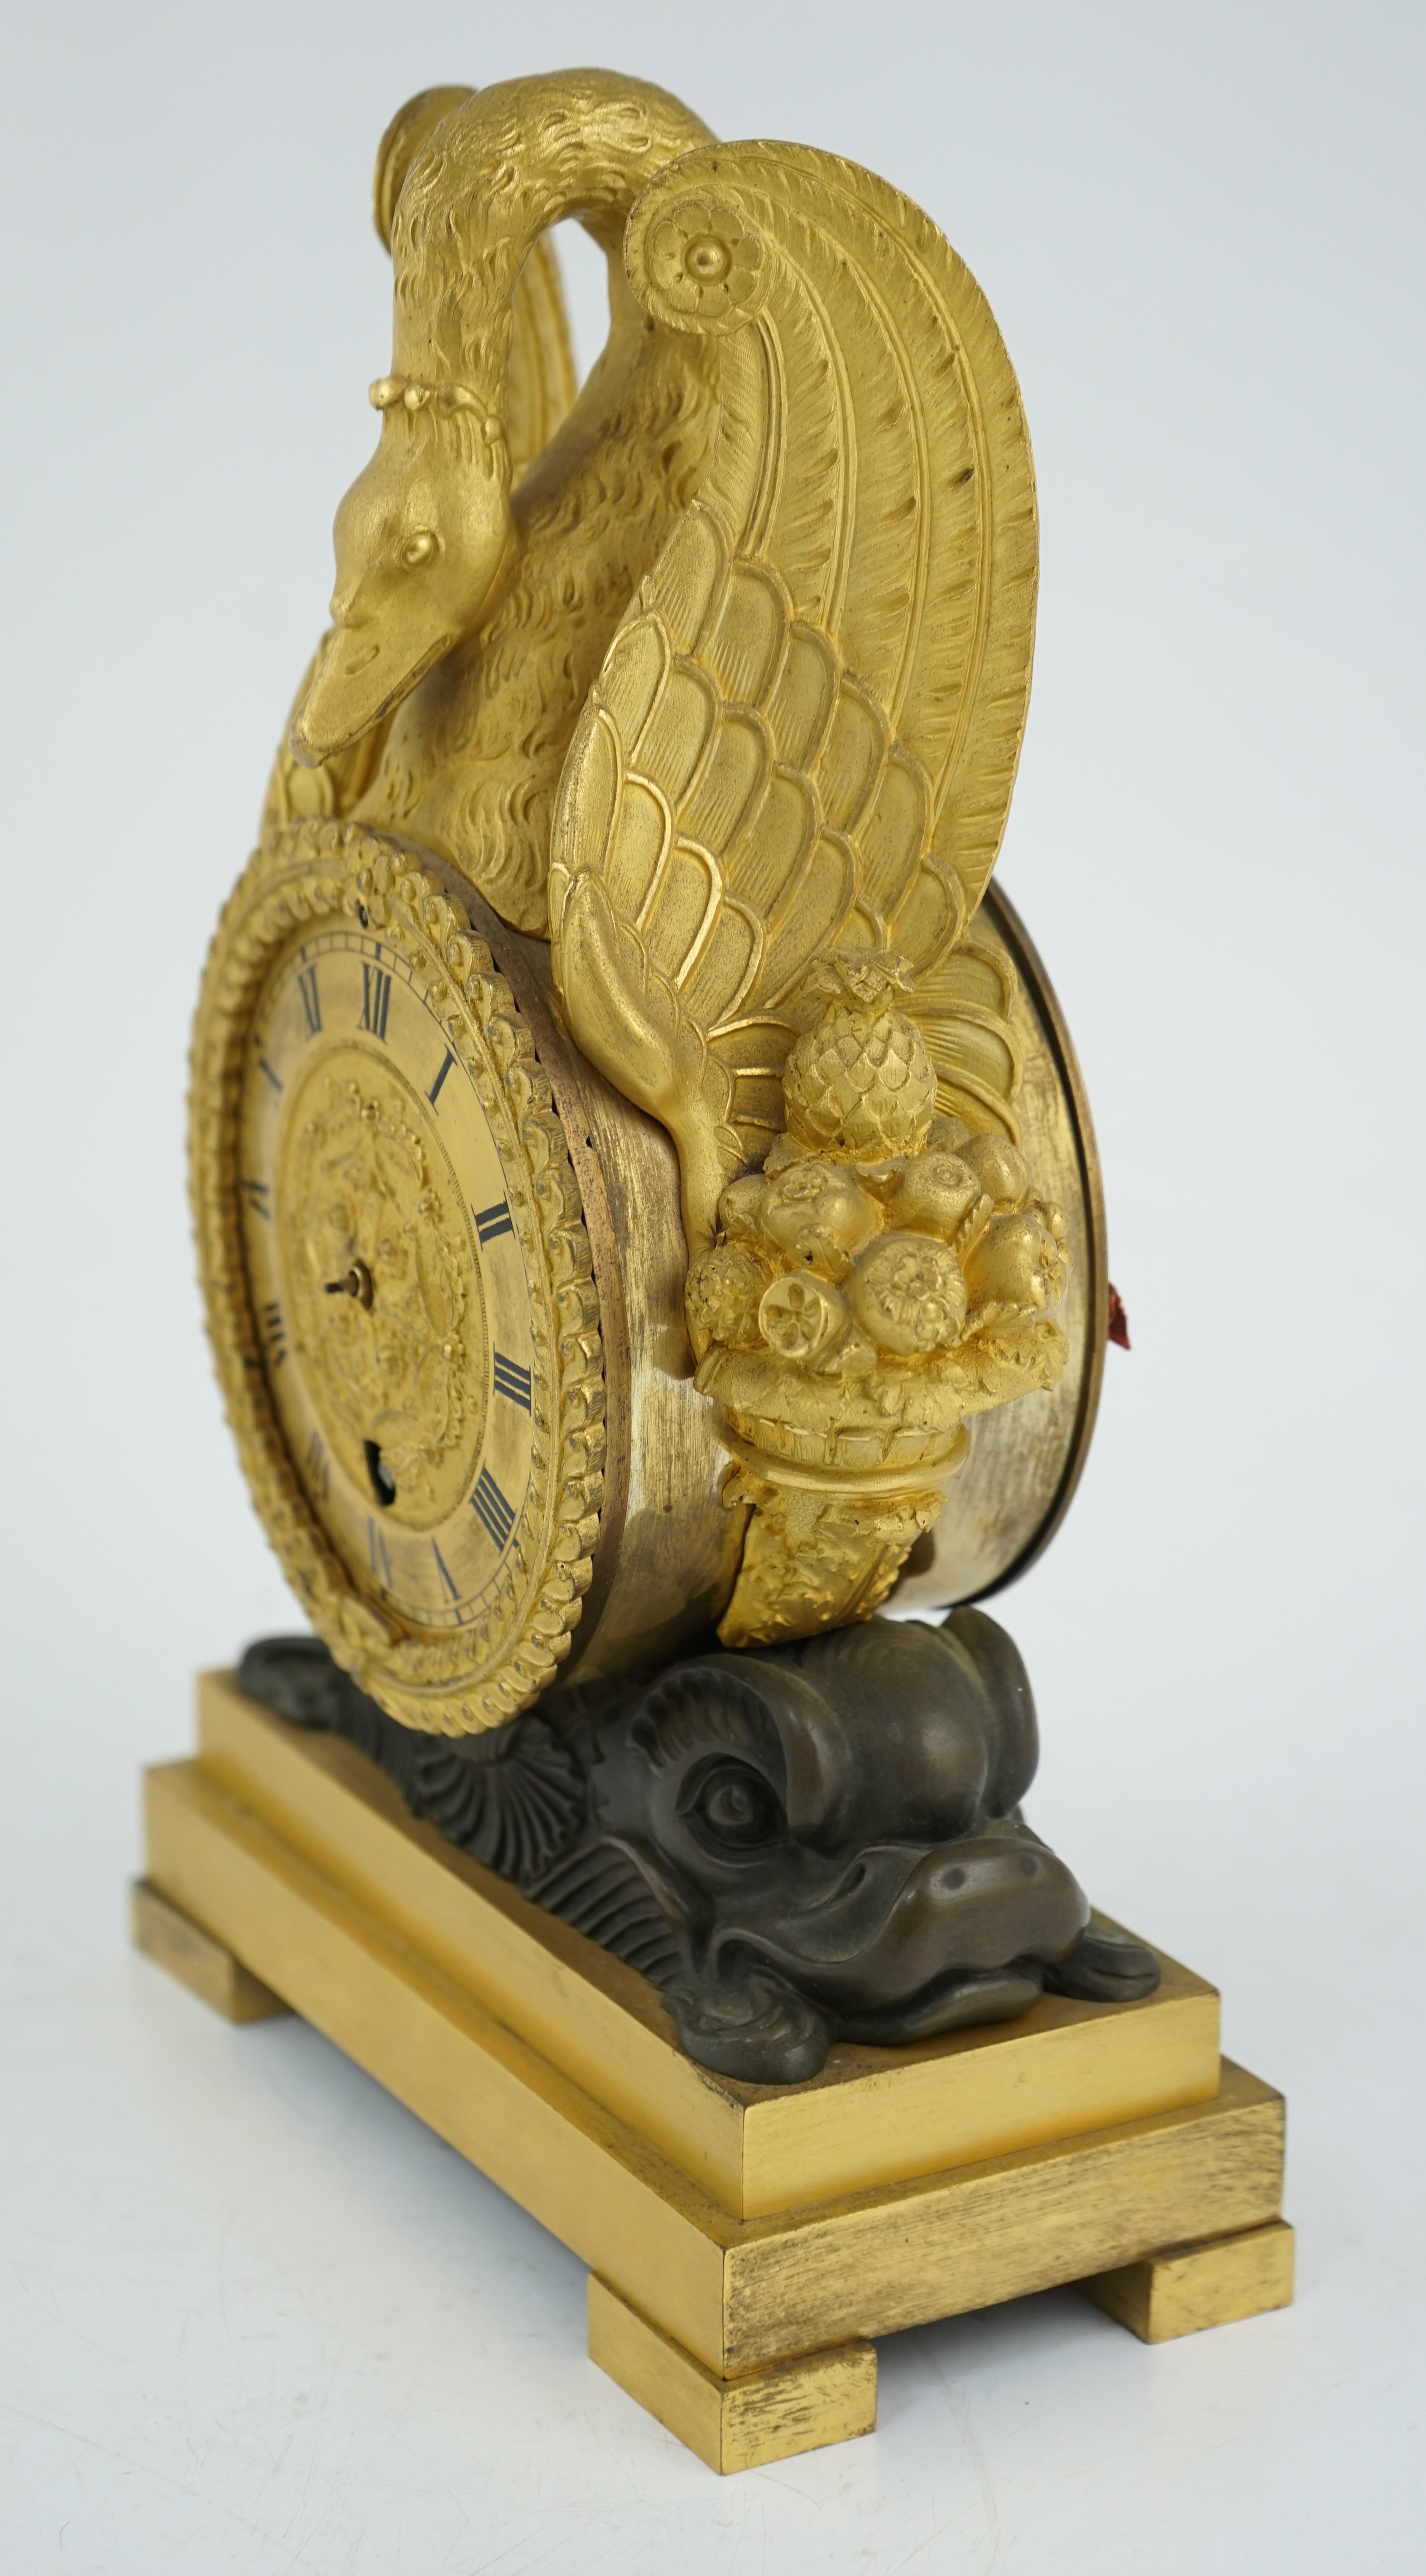 J. Schwearer, Regents Park, a Regency bronze and ormolu mantel timepiece